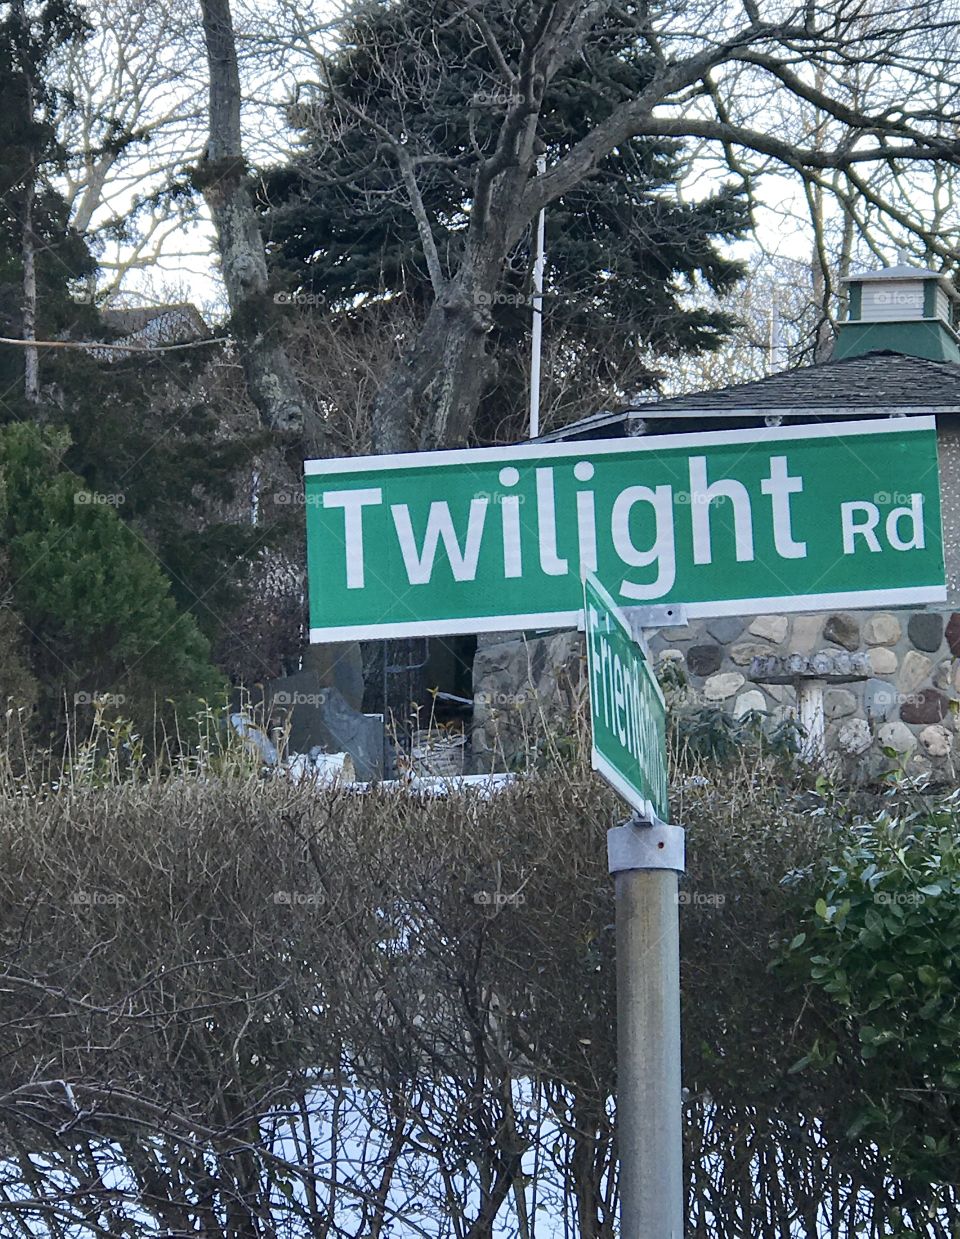 Twilight Rd
